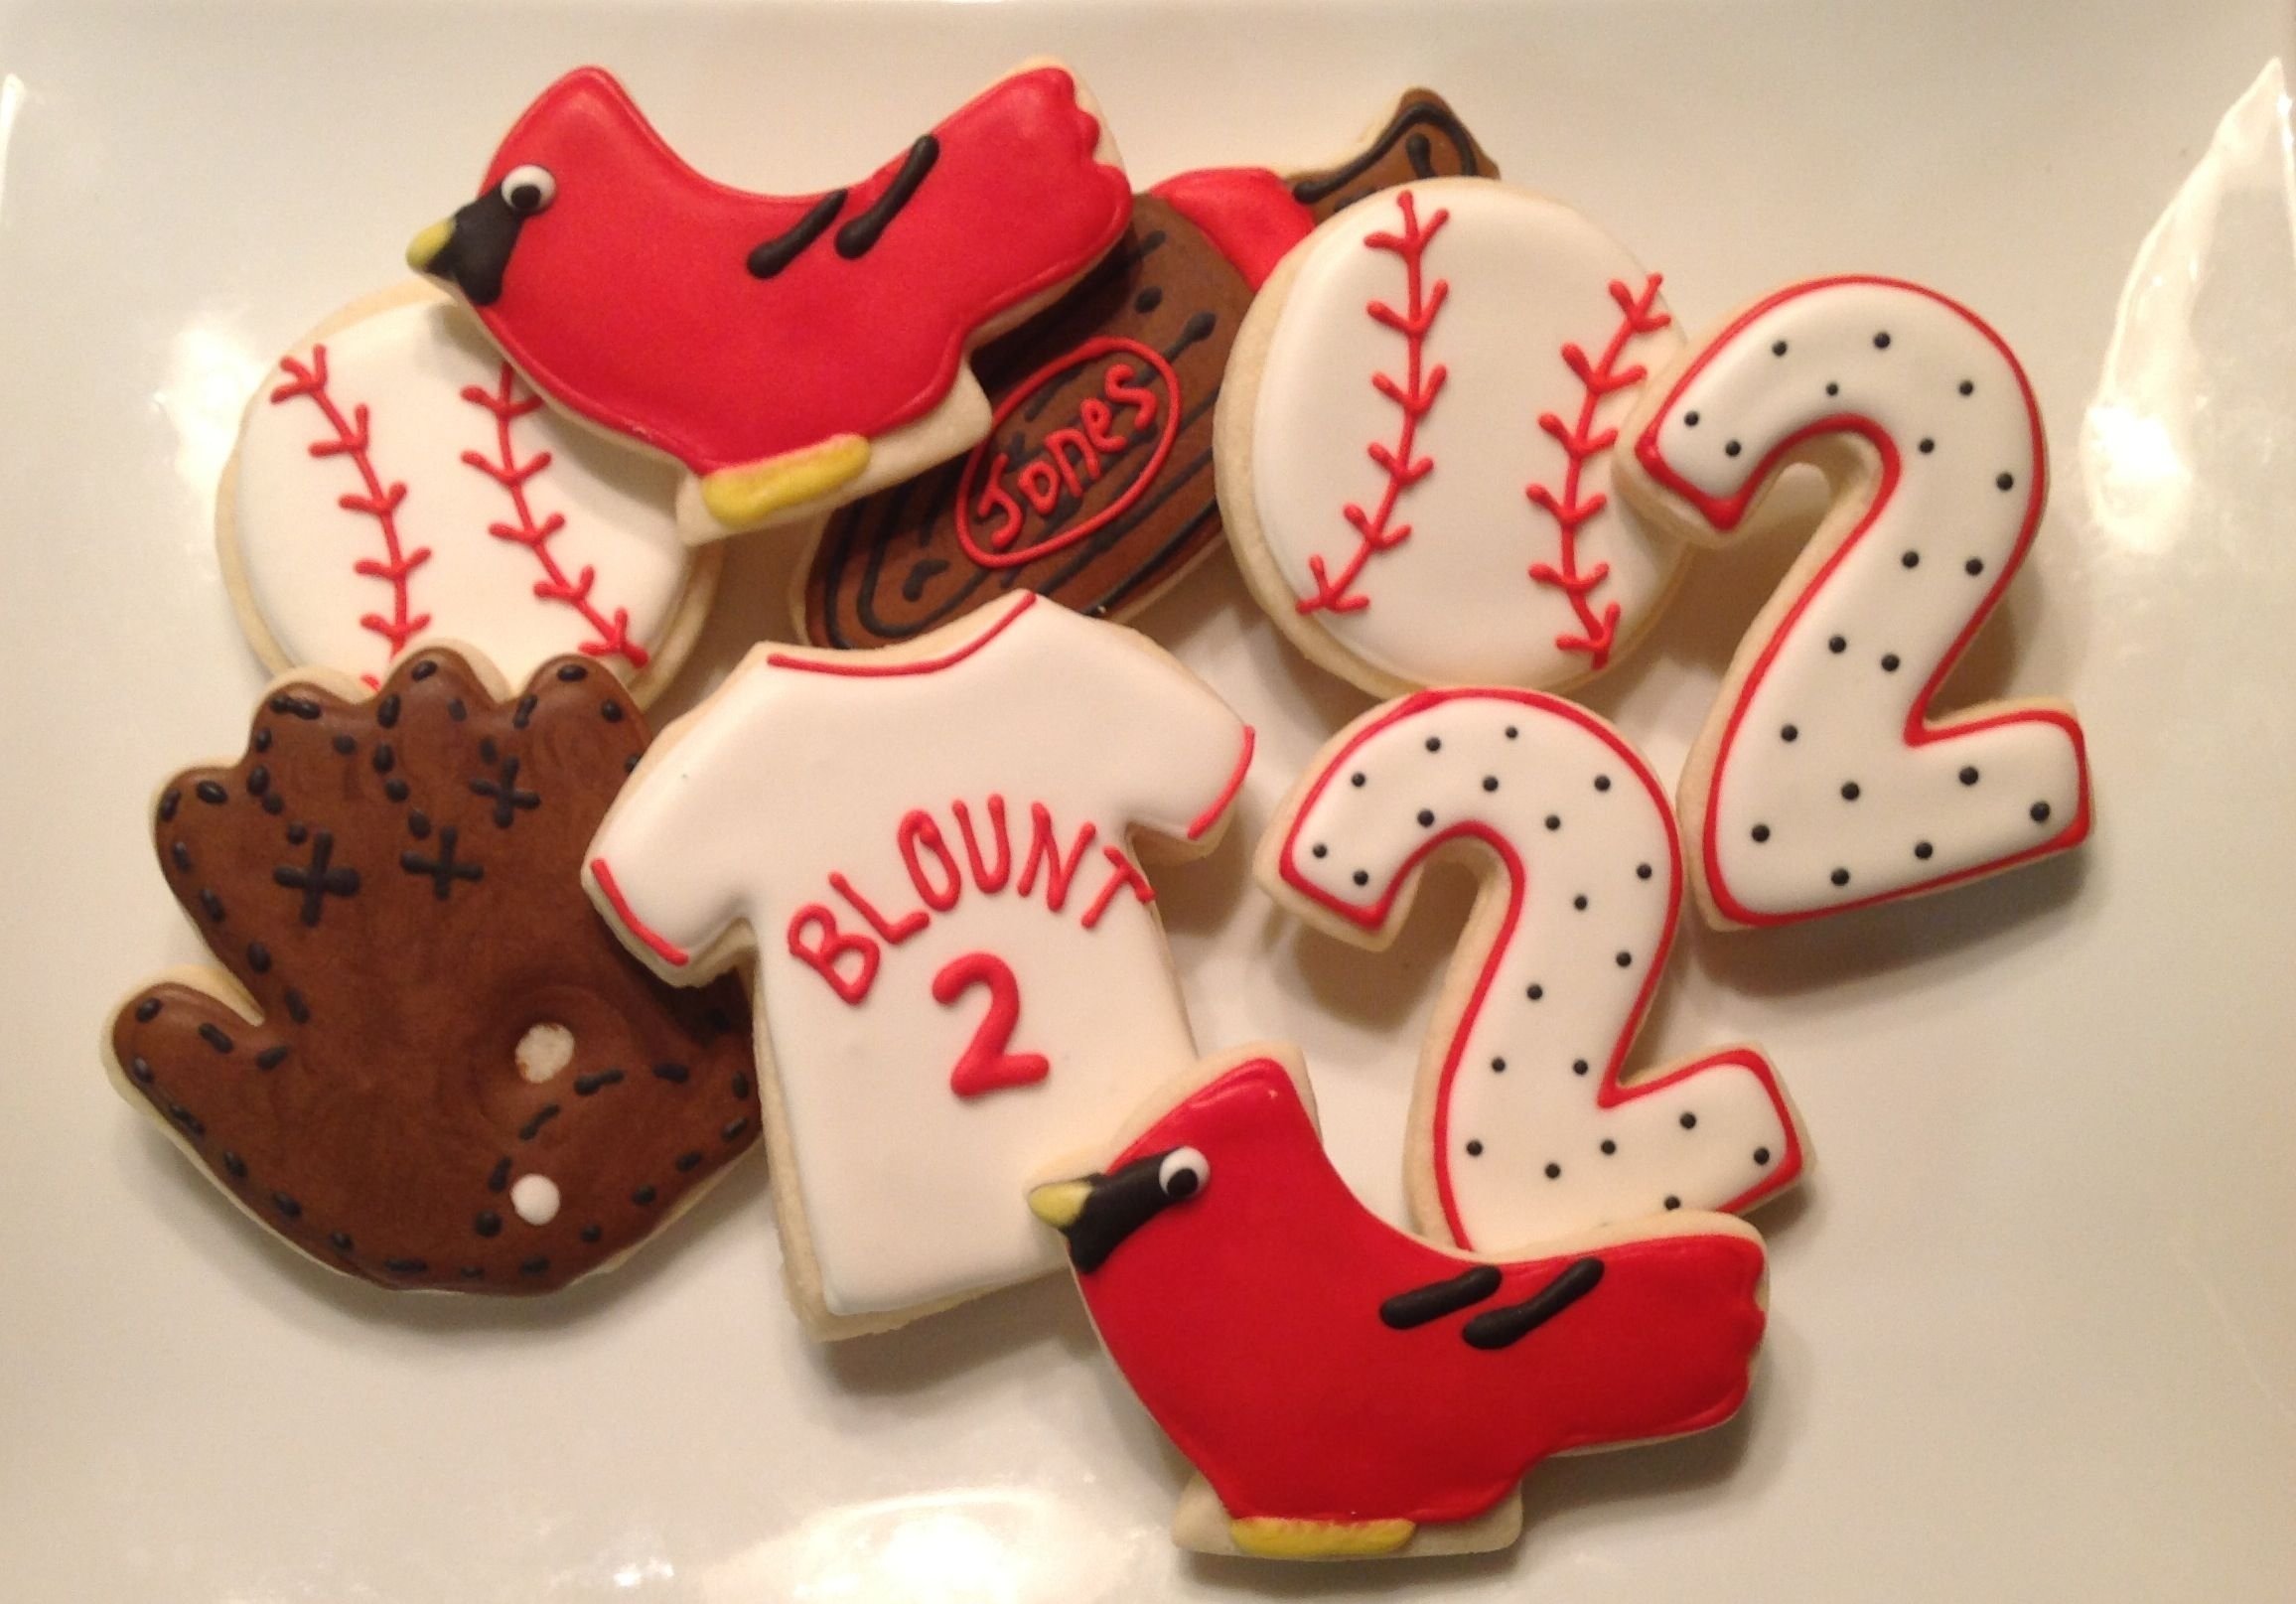 10 Stylish Birthday Party Ideas St. Louis st louis cardinals birthday platter decorated sugar cookiesi 2022